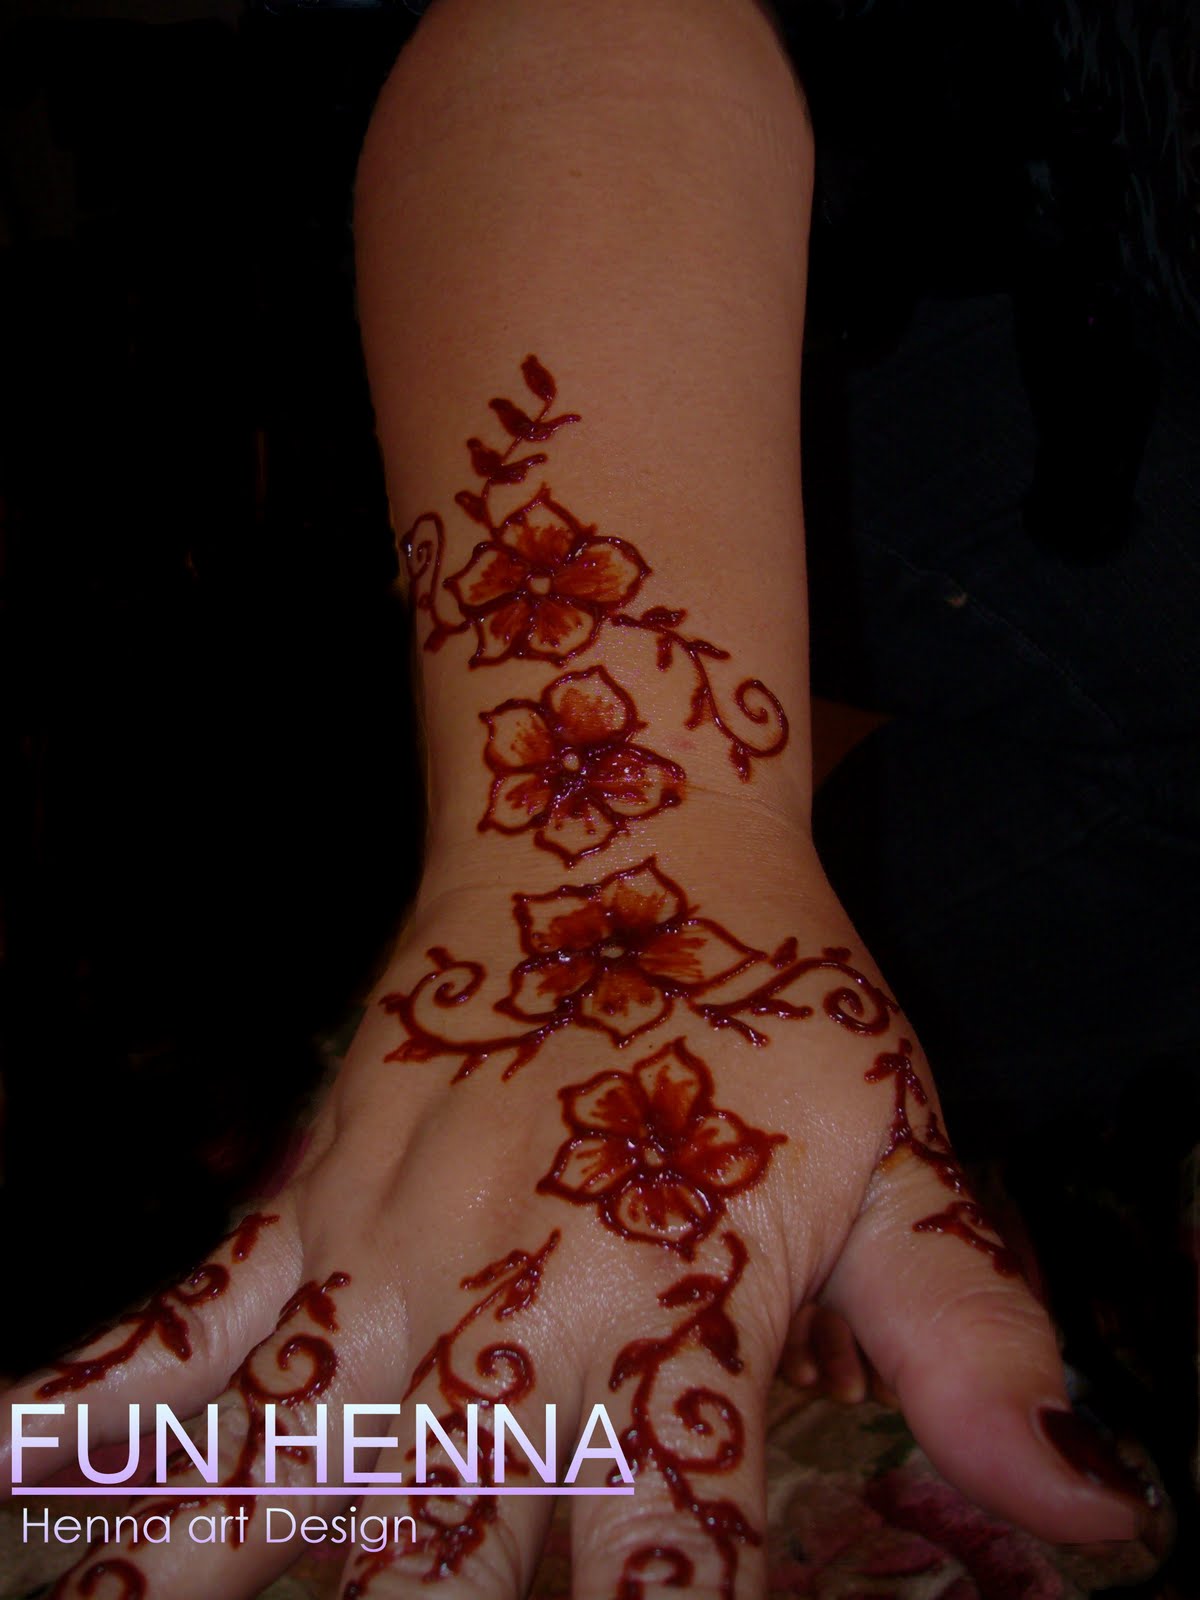  Henna Art Design Fun Henna Collection